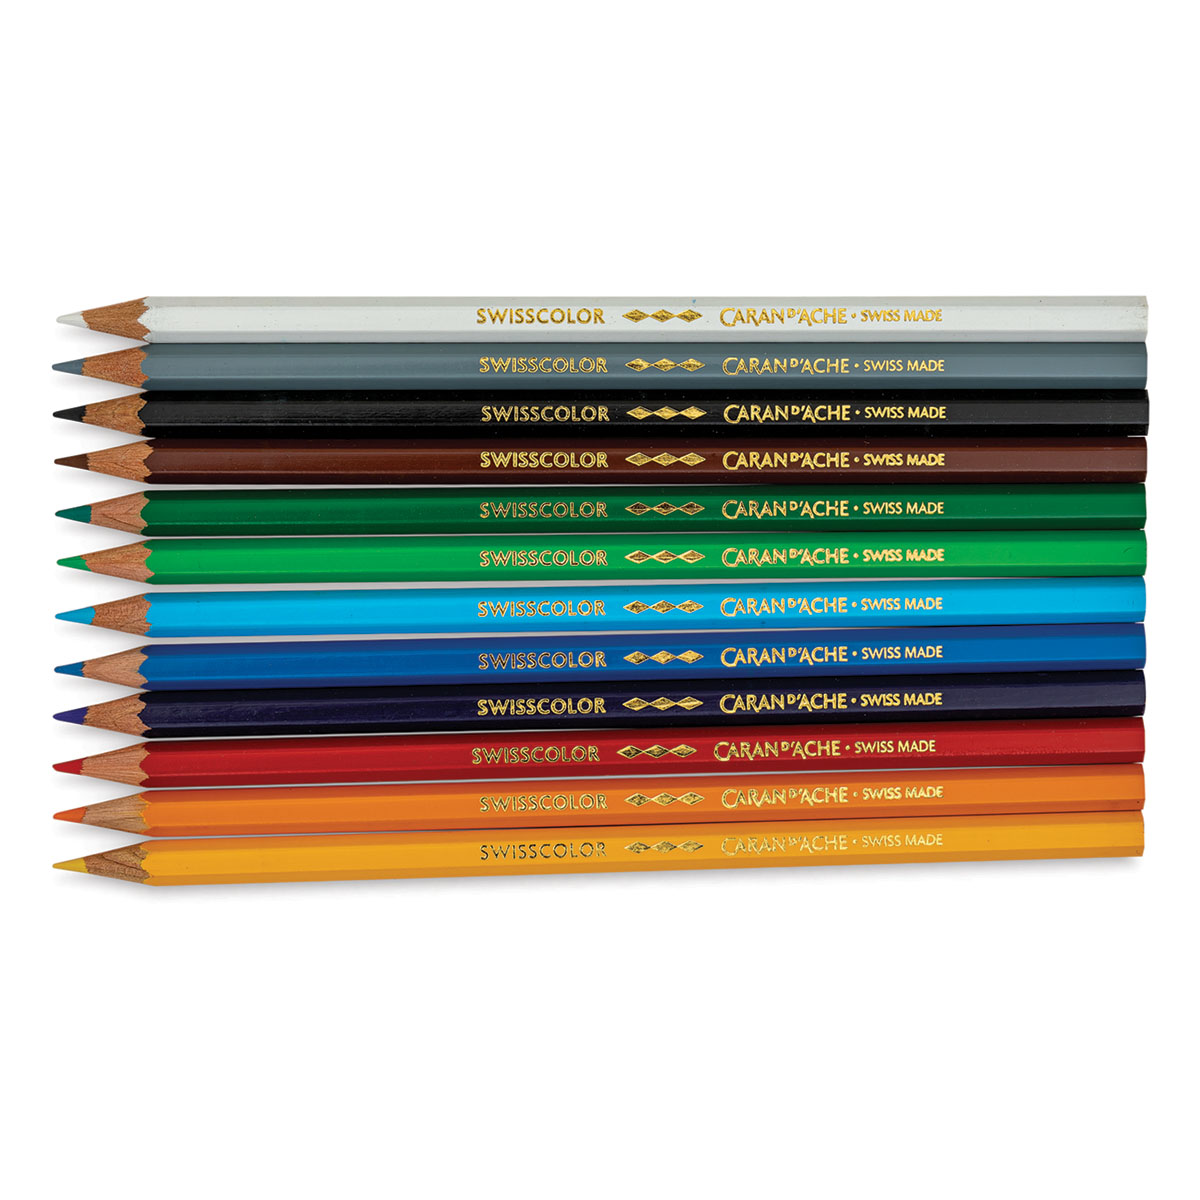 Caran d'Ache Swisscolor Water-Soluble Colored Pencils - Set of 12